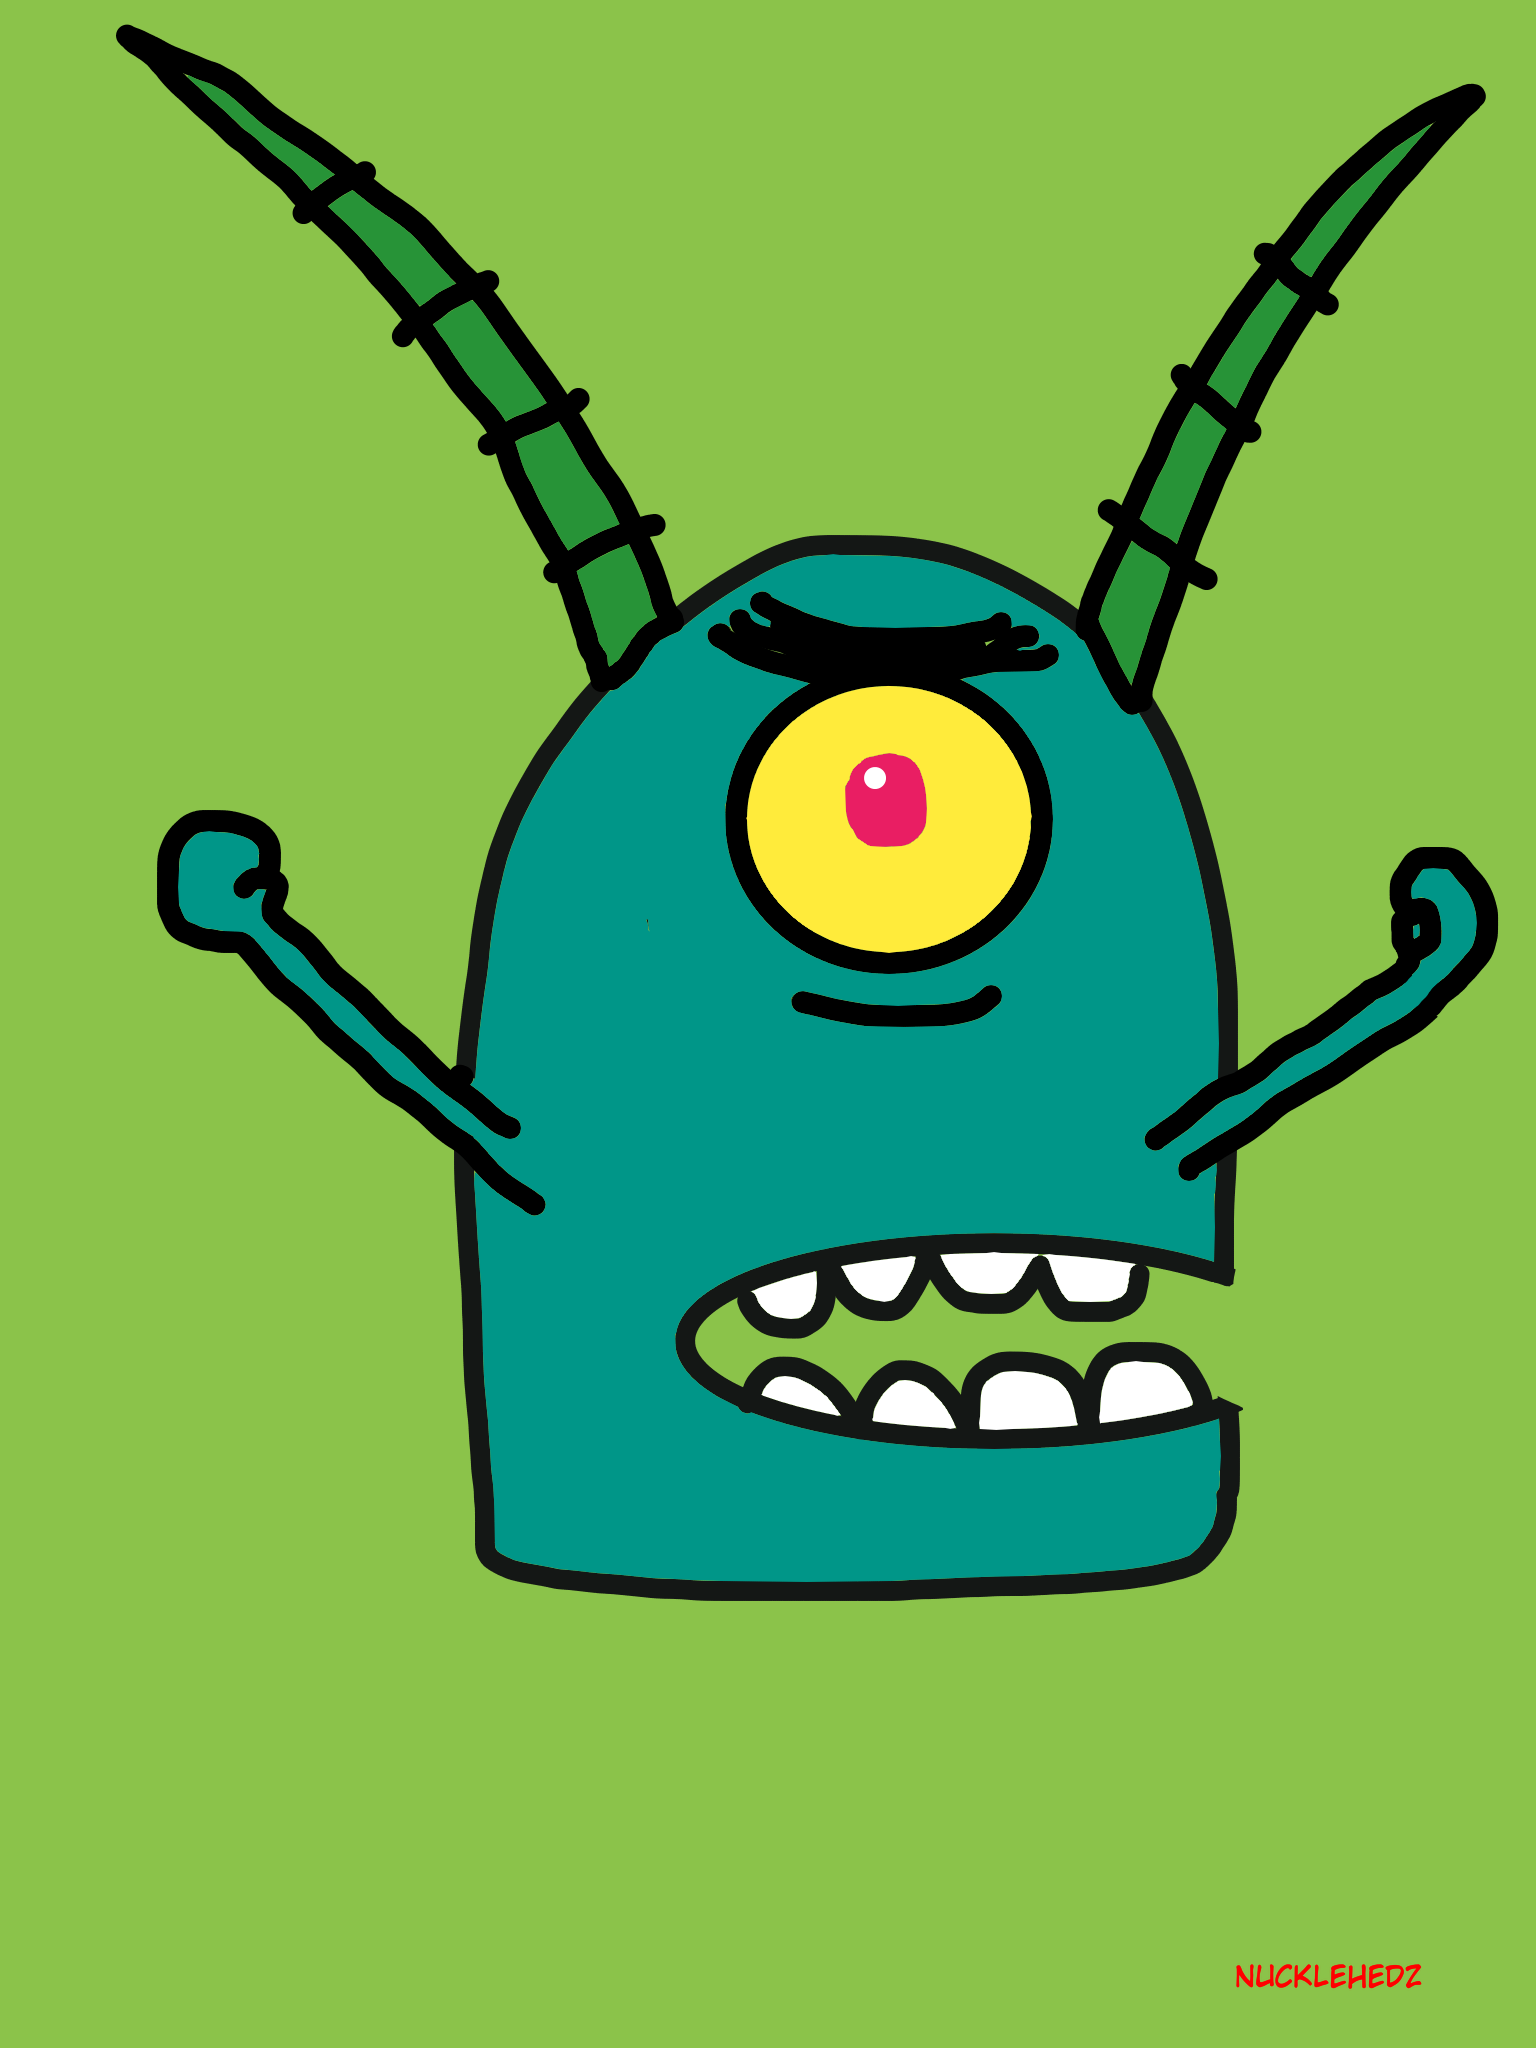 Nucklehed - Plankton